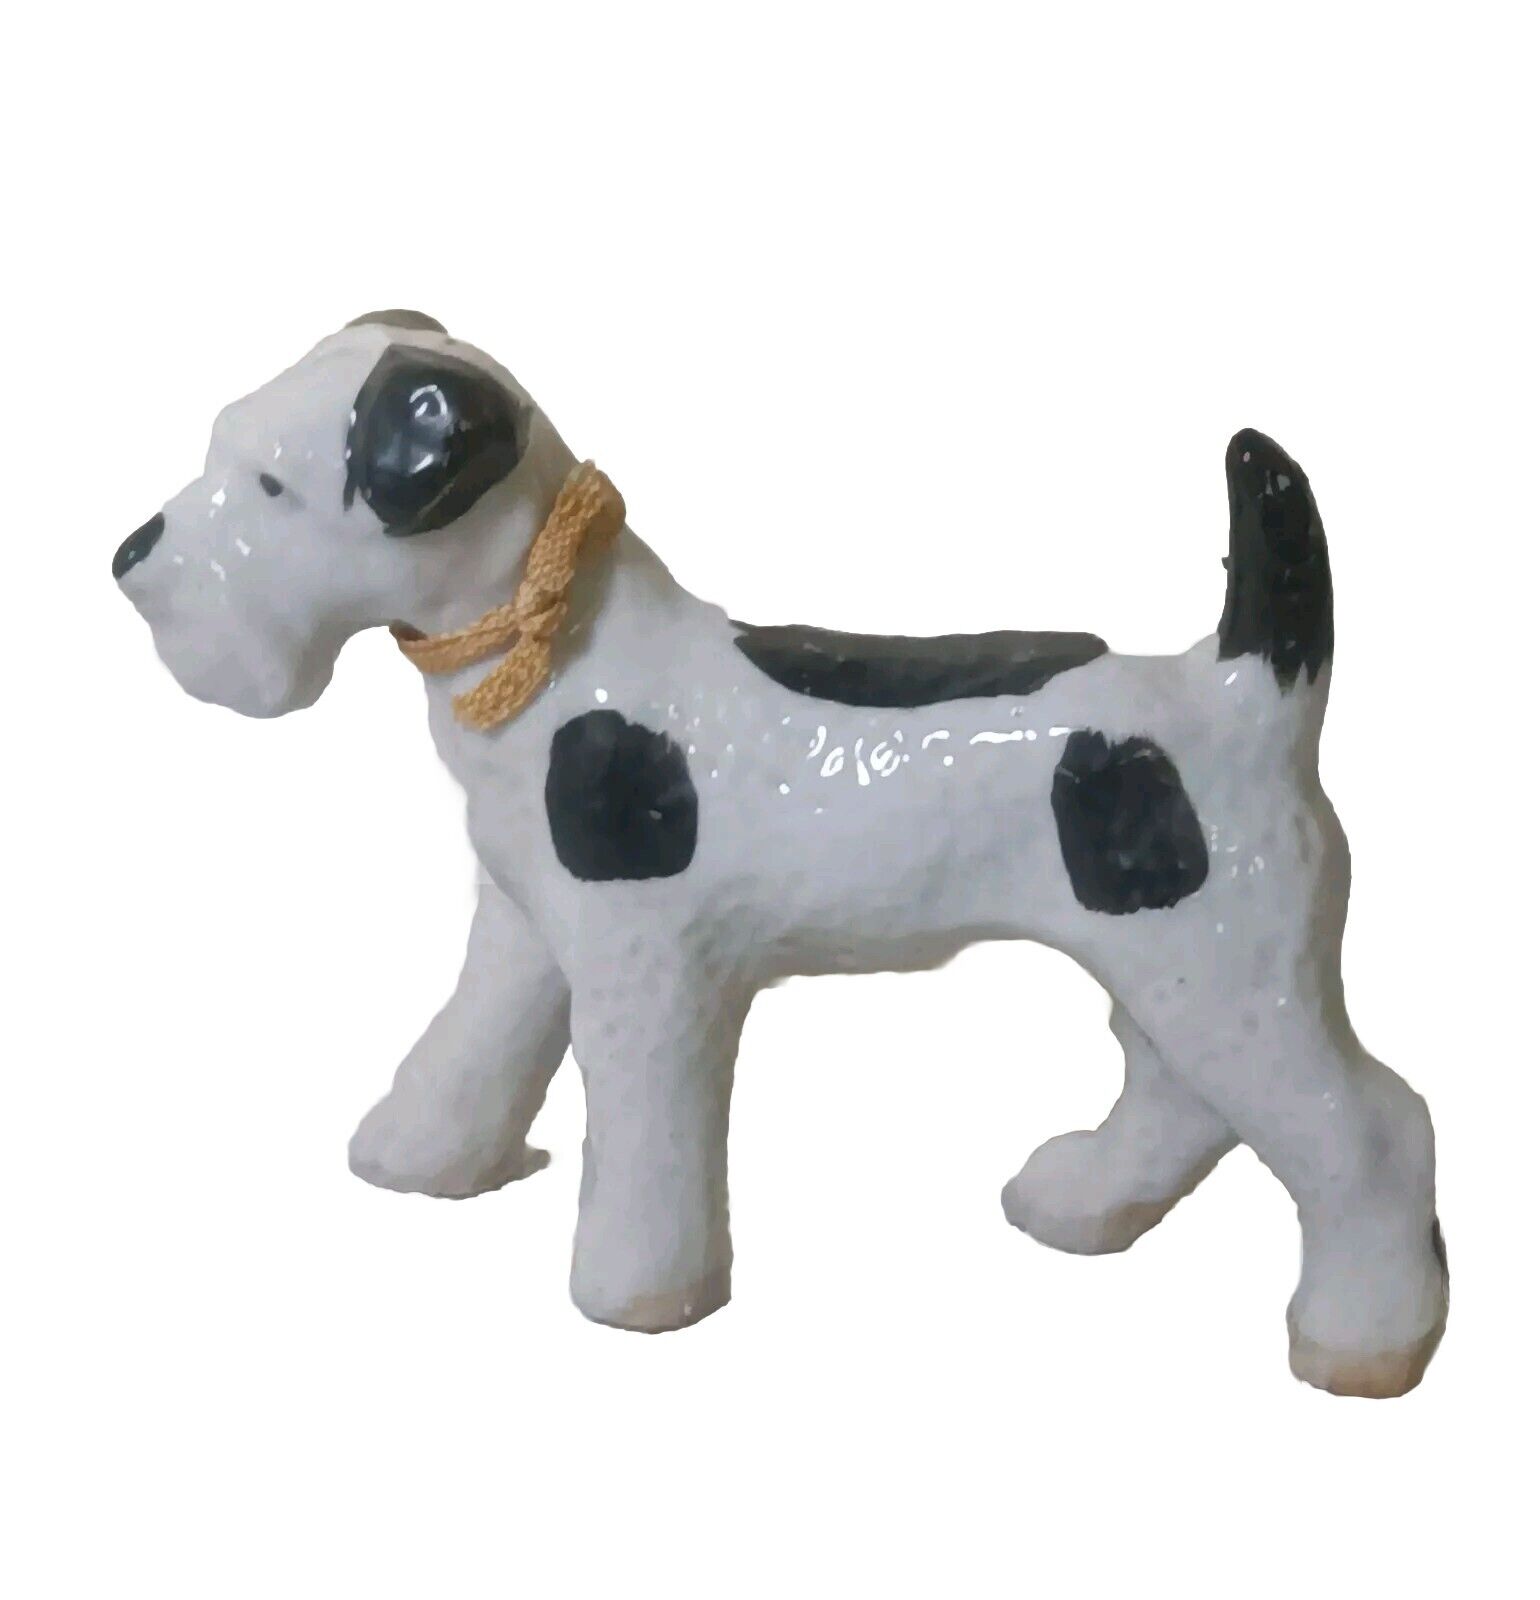 Airedale Terrier Figurine Porcelain Dog White Black spots Japan Granny core